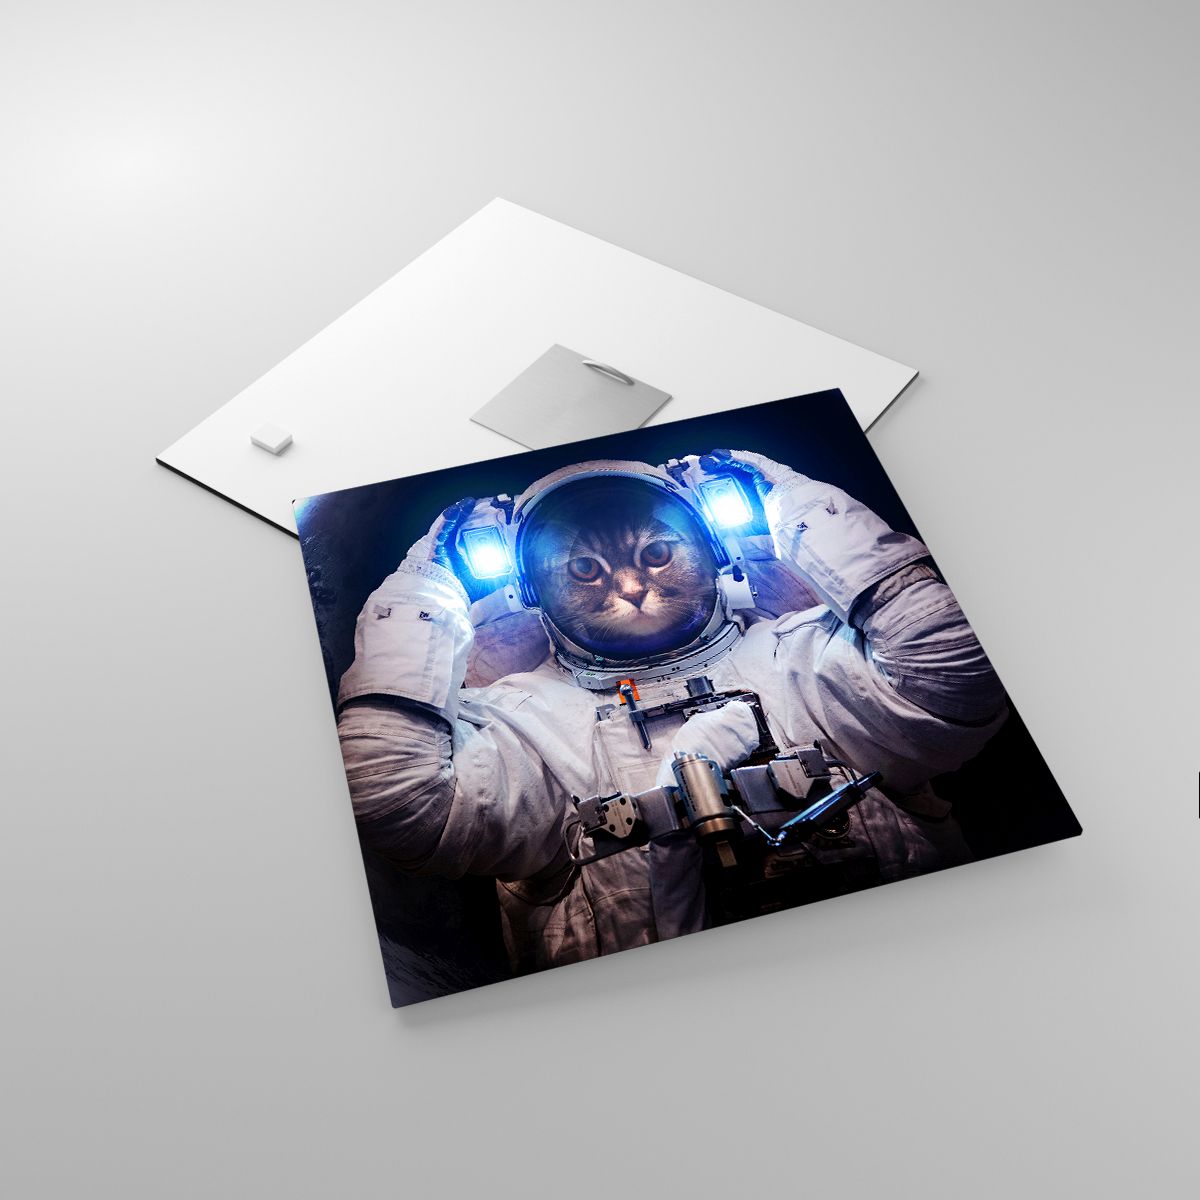 Glasbild Abstraktion, Glasbild Astronaut, Glasbild Kosmos, Glasbild Kunst, Glasbild Katze